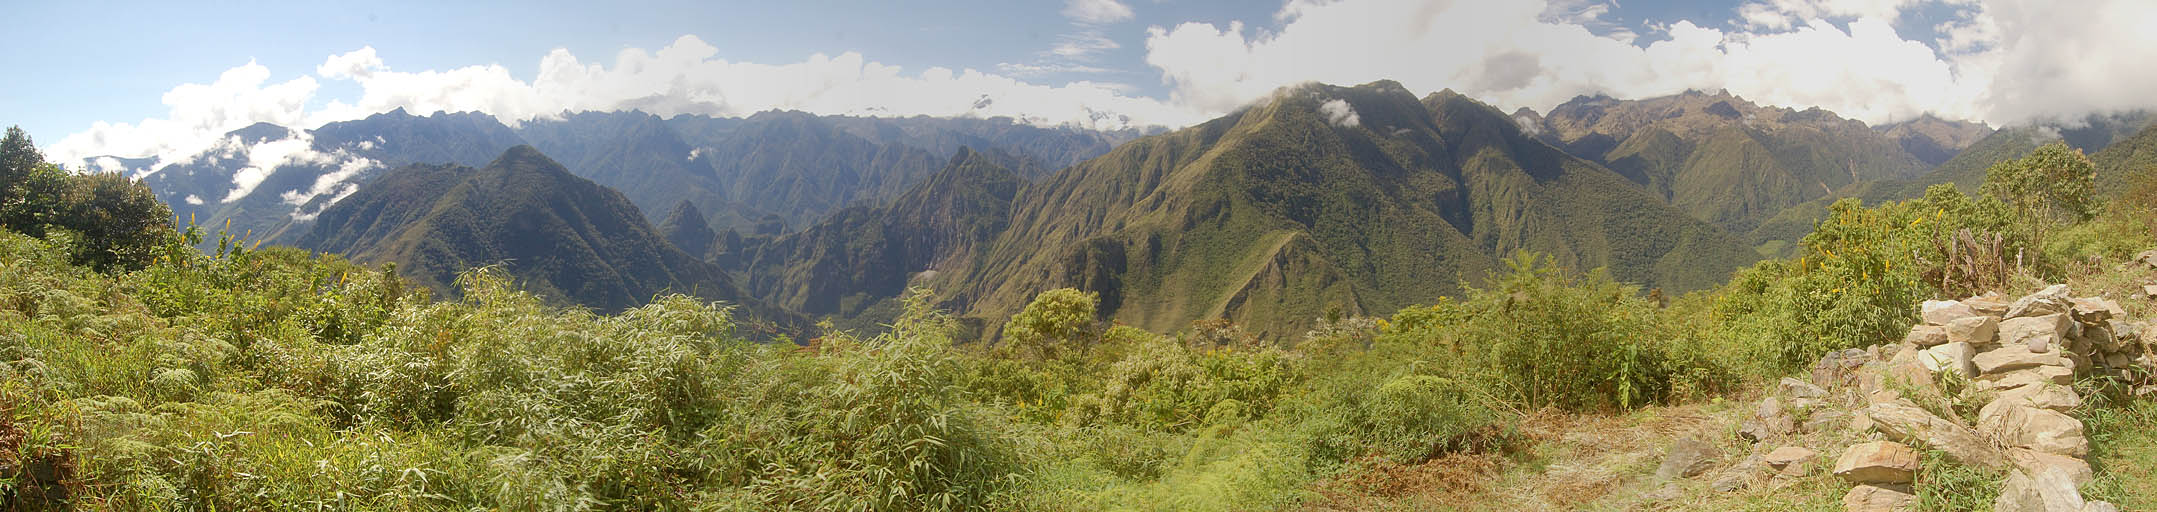 Machu Picchu from Patallacta